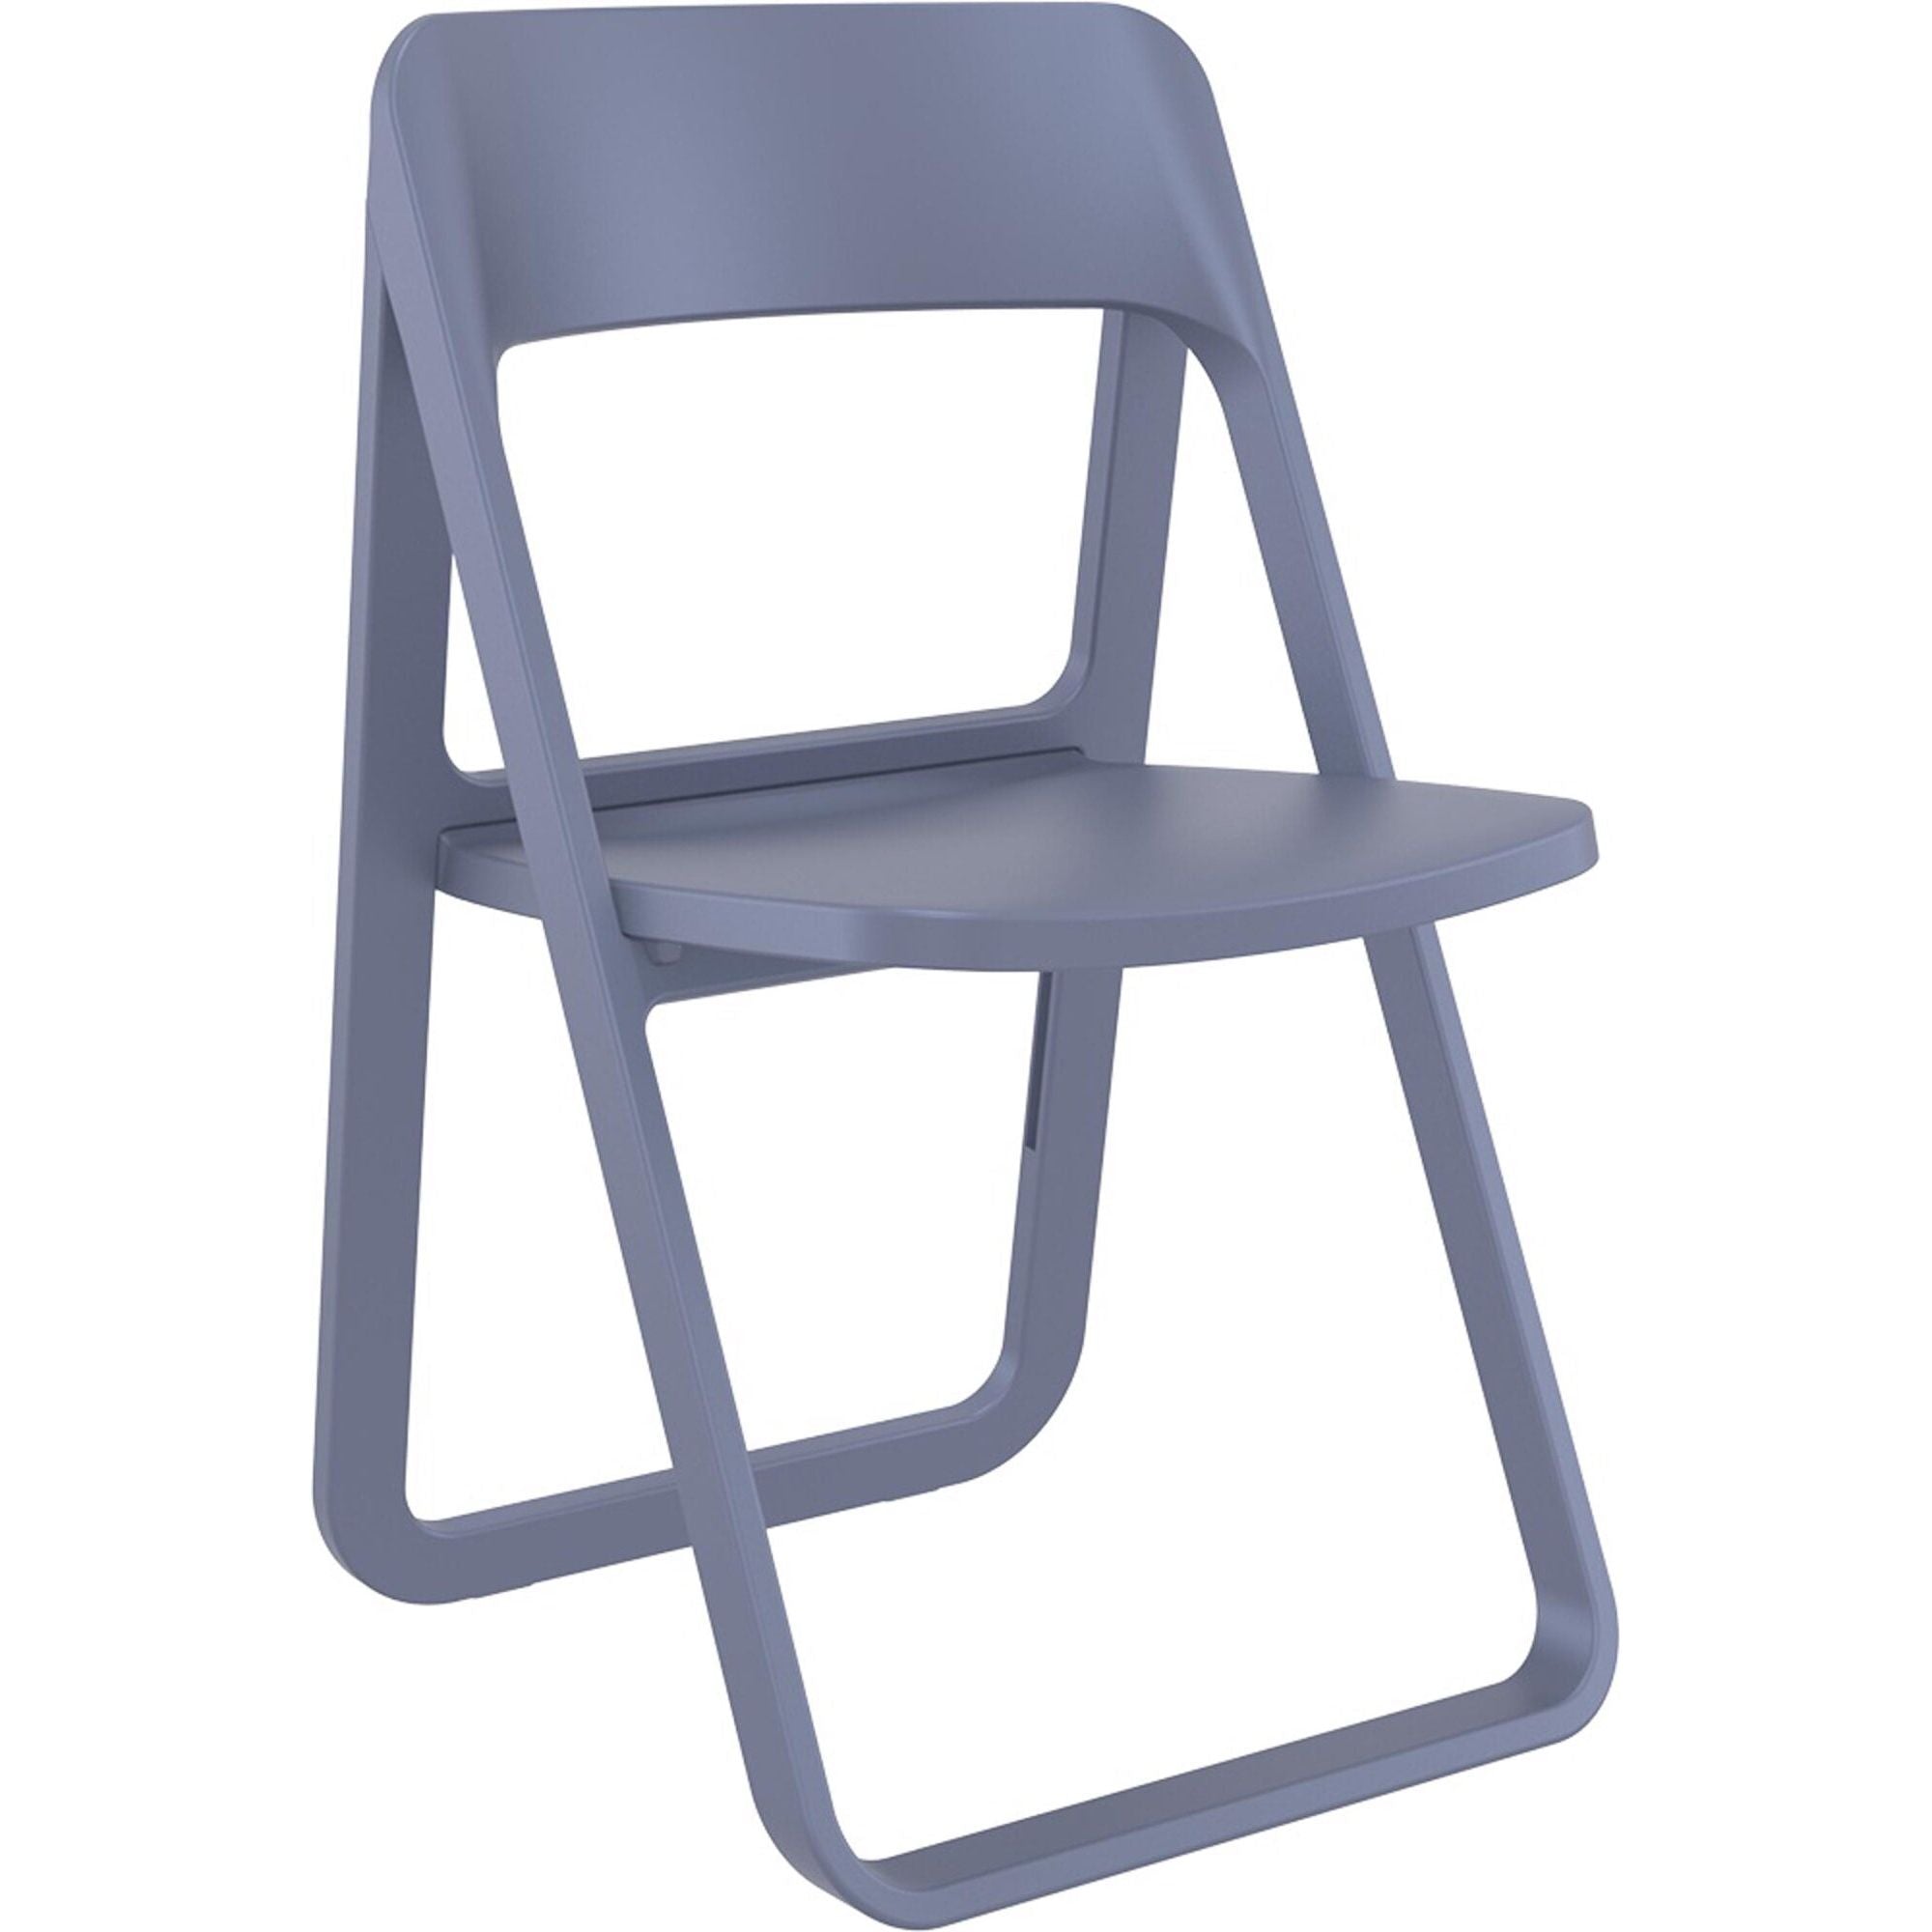 Garbar Dream folding chair indoors, dark gray outdoors